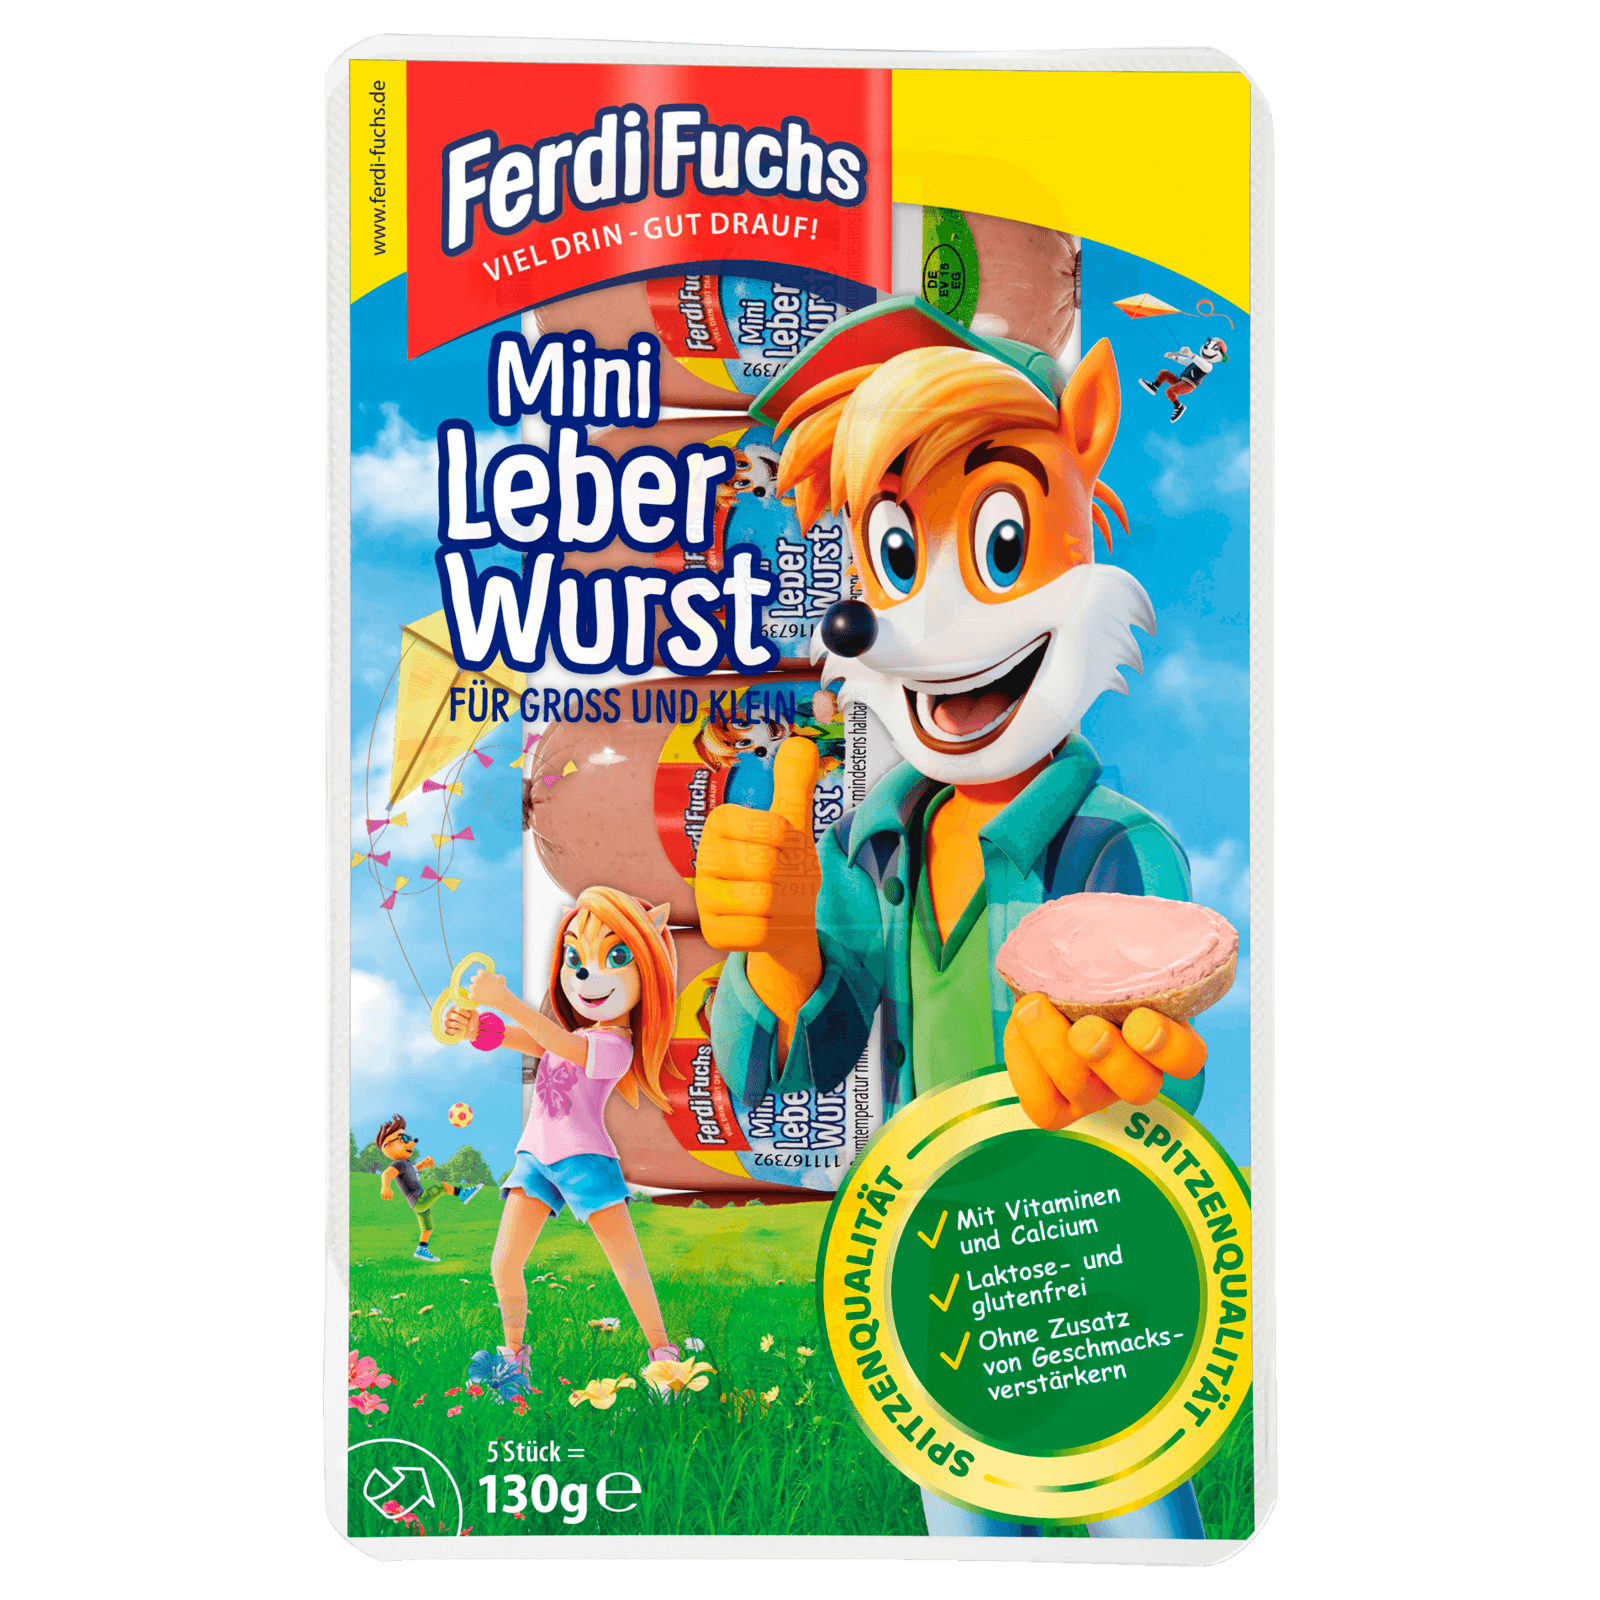 Ferdi Fuchs Mini Leberwurst 5x26g REWE online bestellen! bei